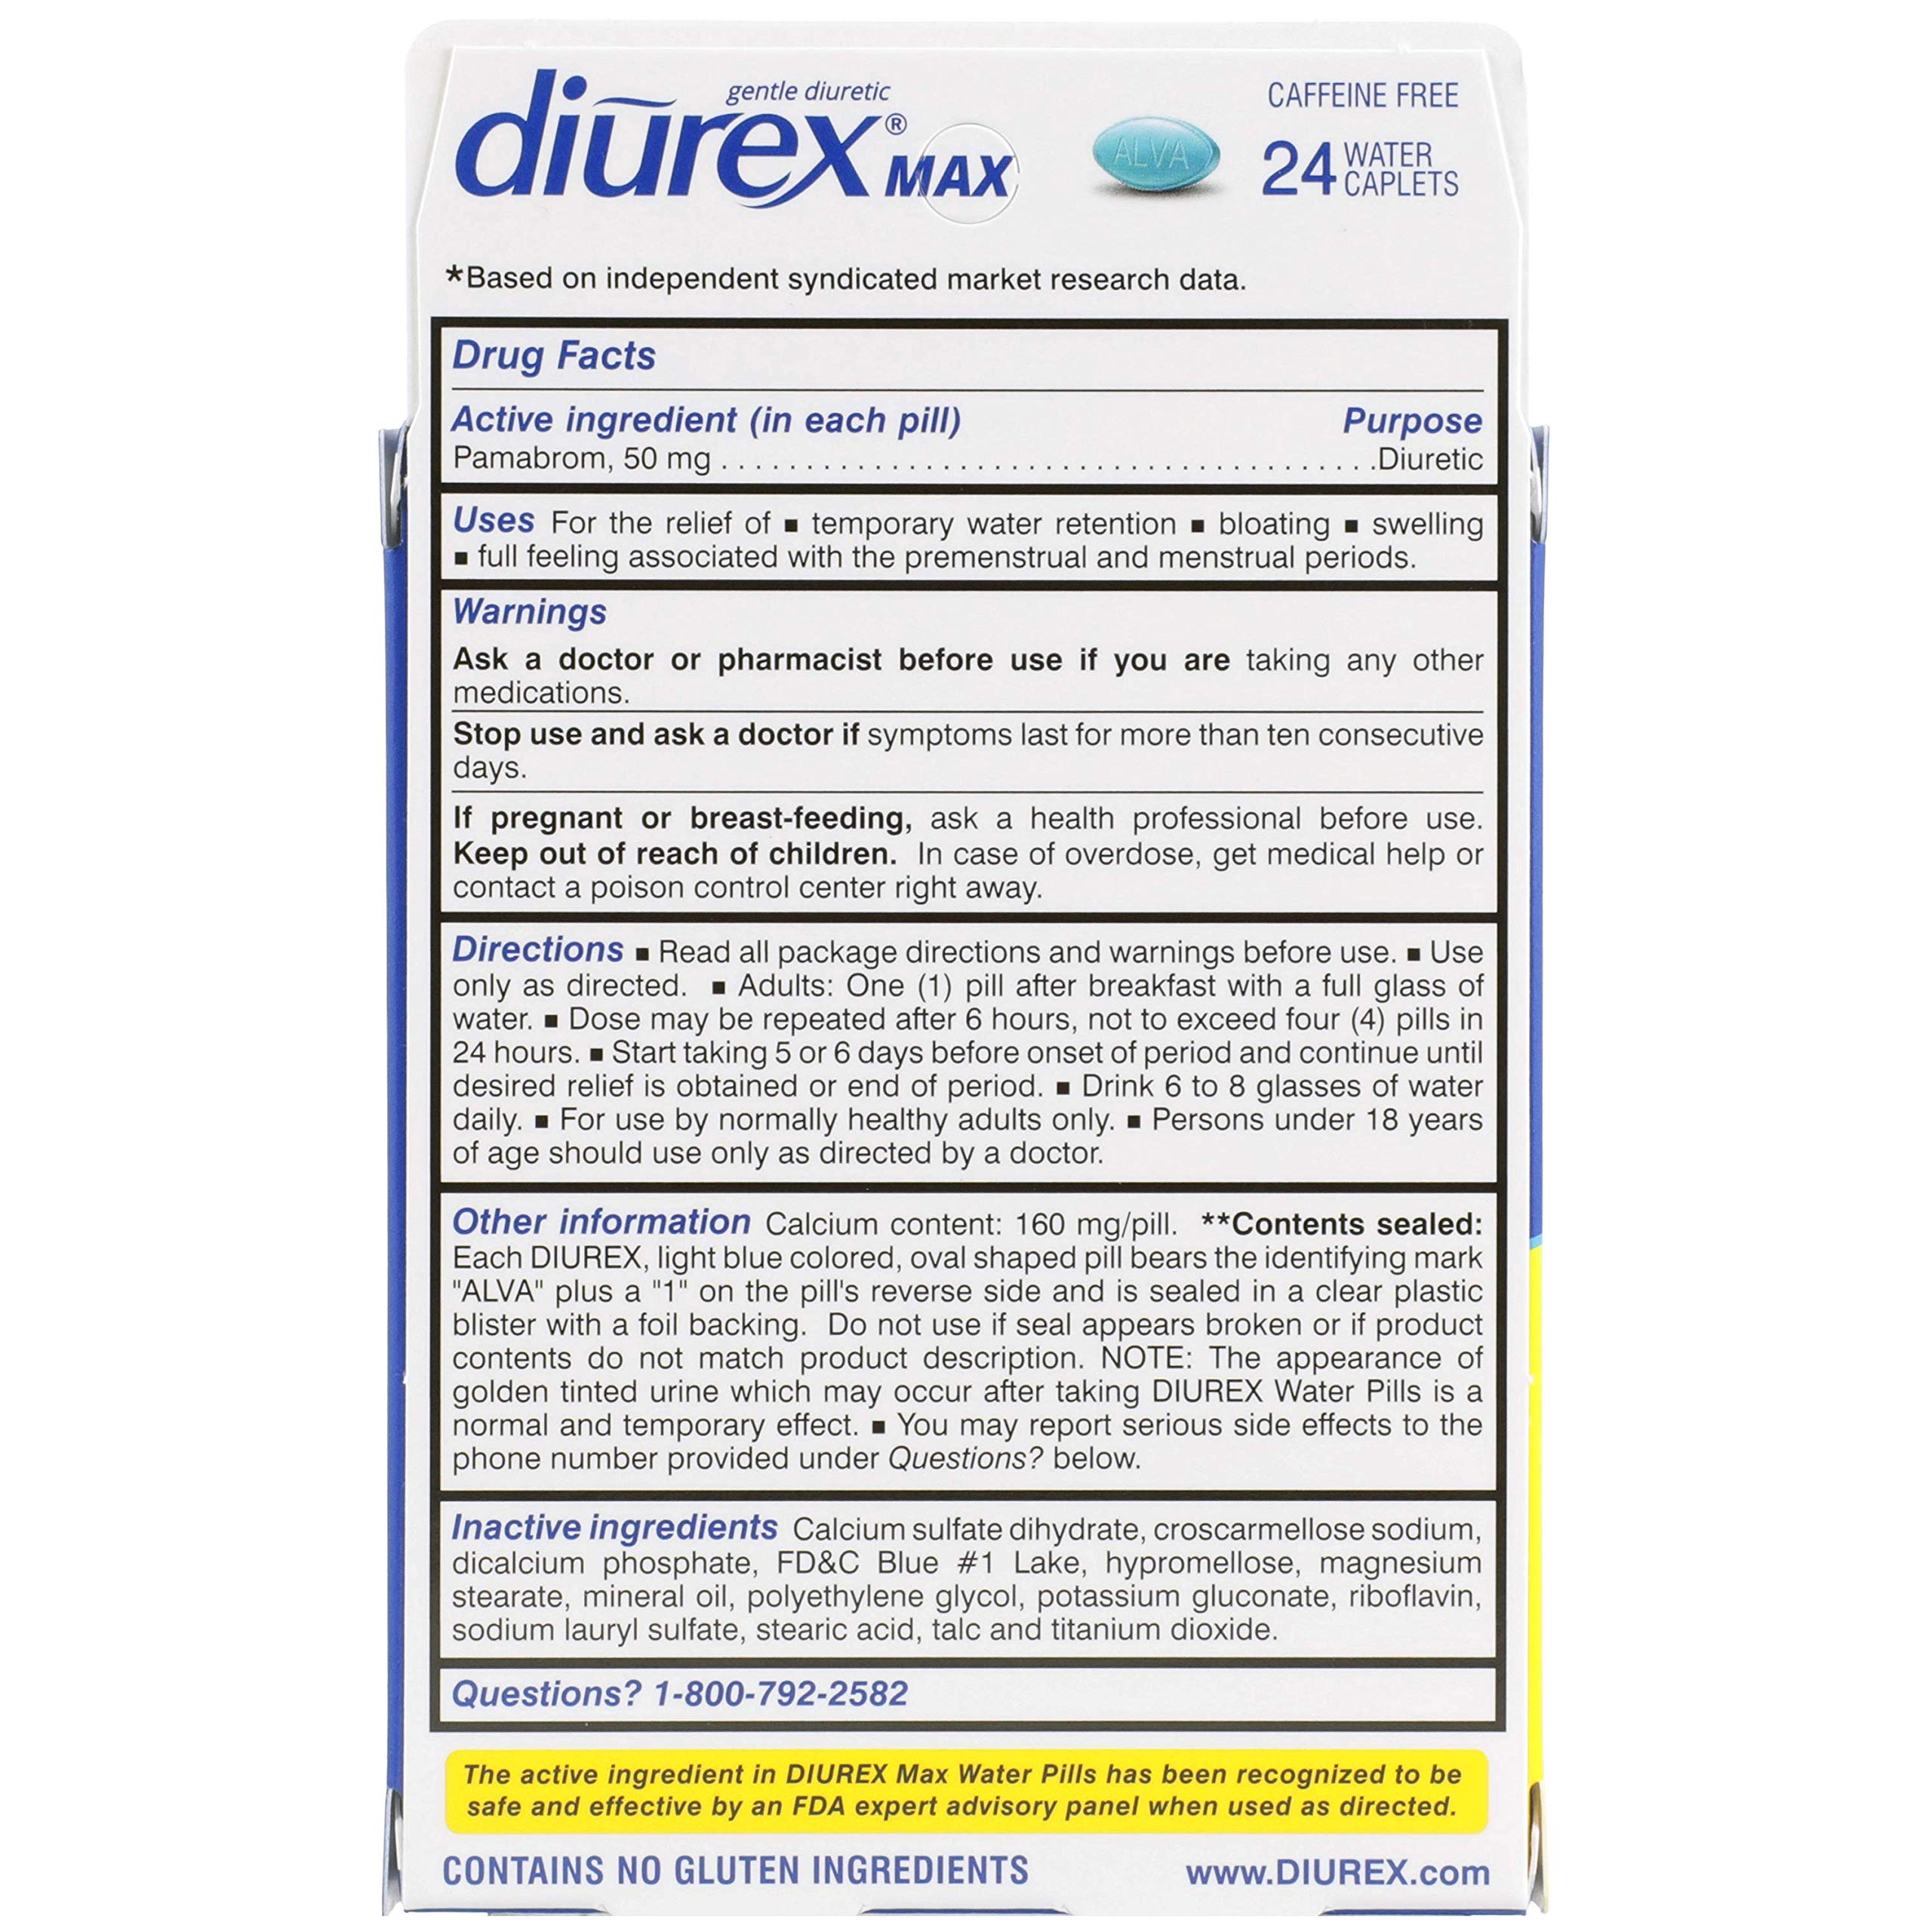 Diurex Max Water Pills - Maximum Strength Caffeine Free Diuretic - Relieve Water Bloat - 24 Count